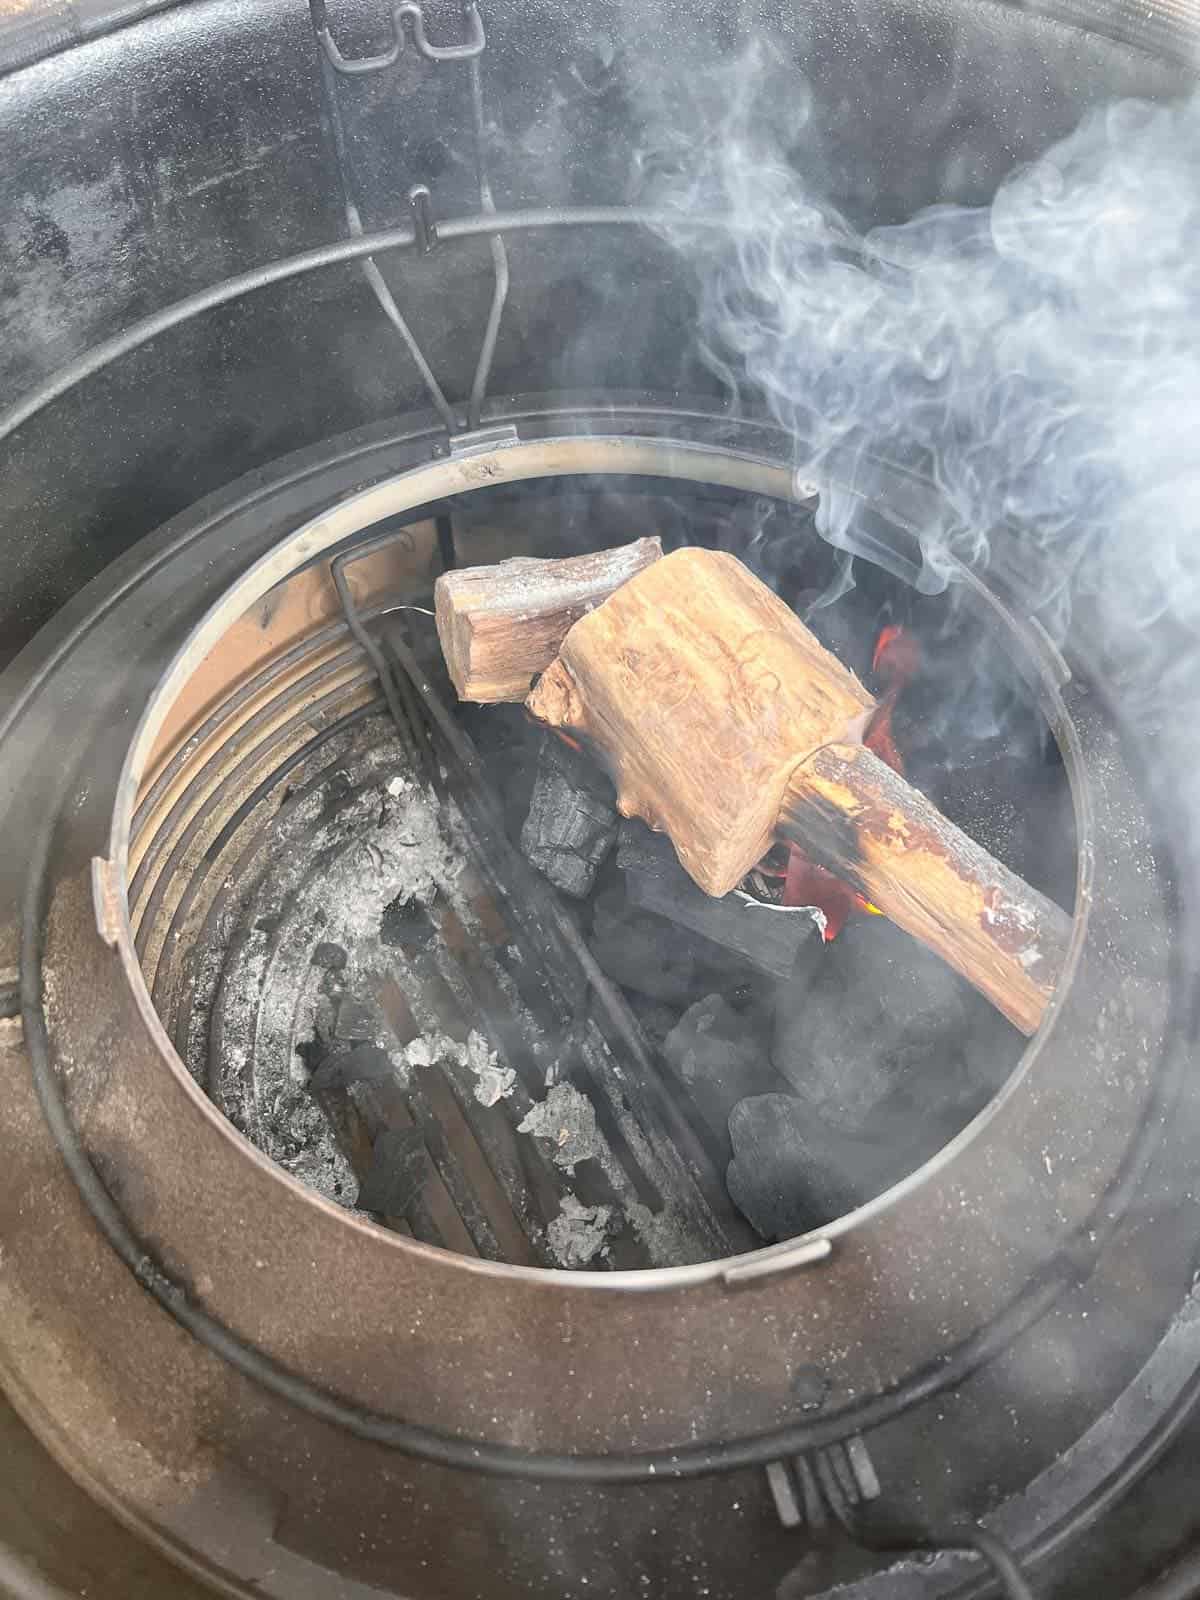 kamado joe ceramic oven set up for indirect cooking